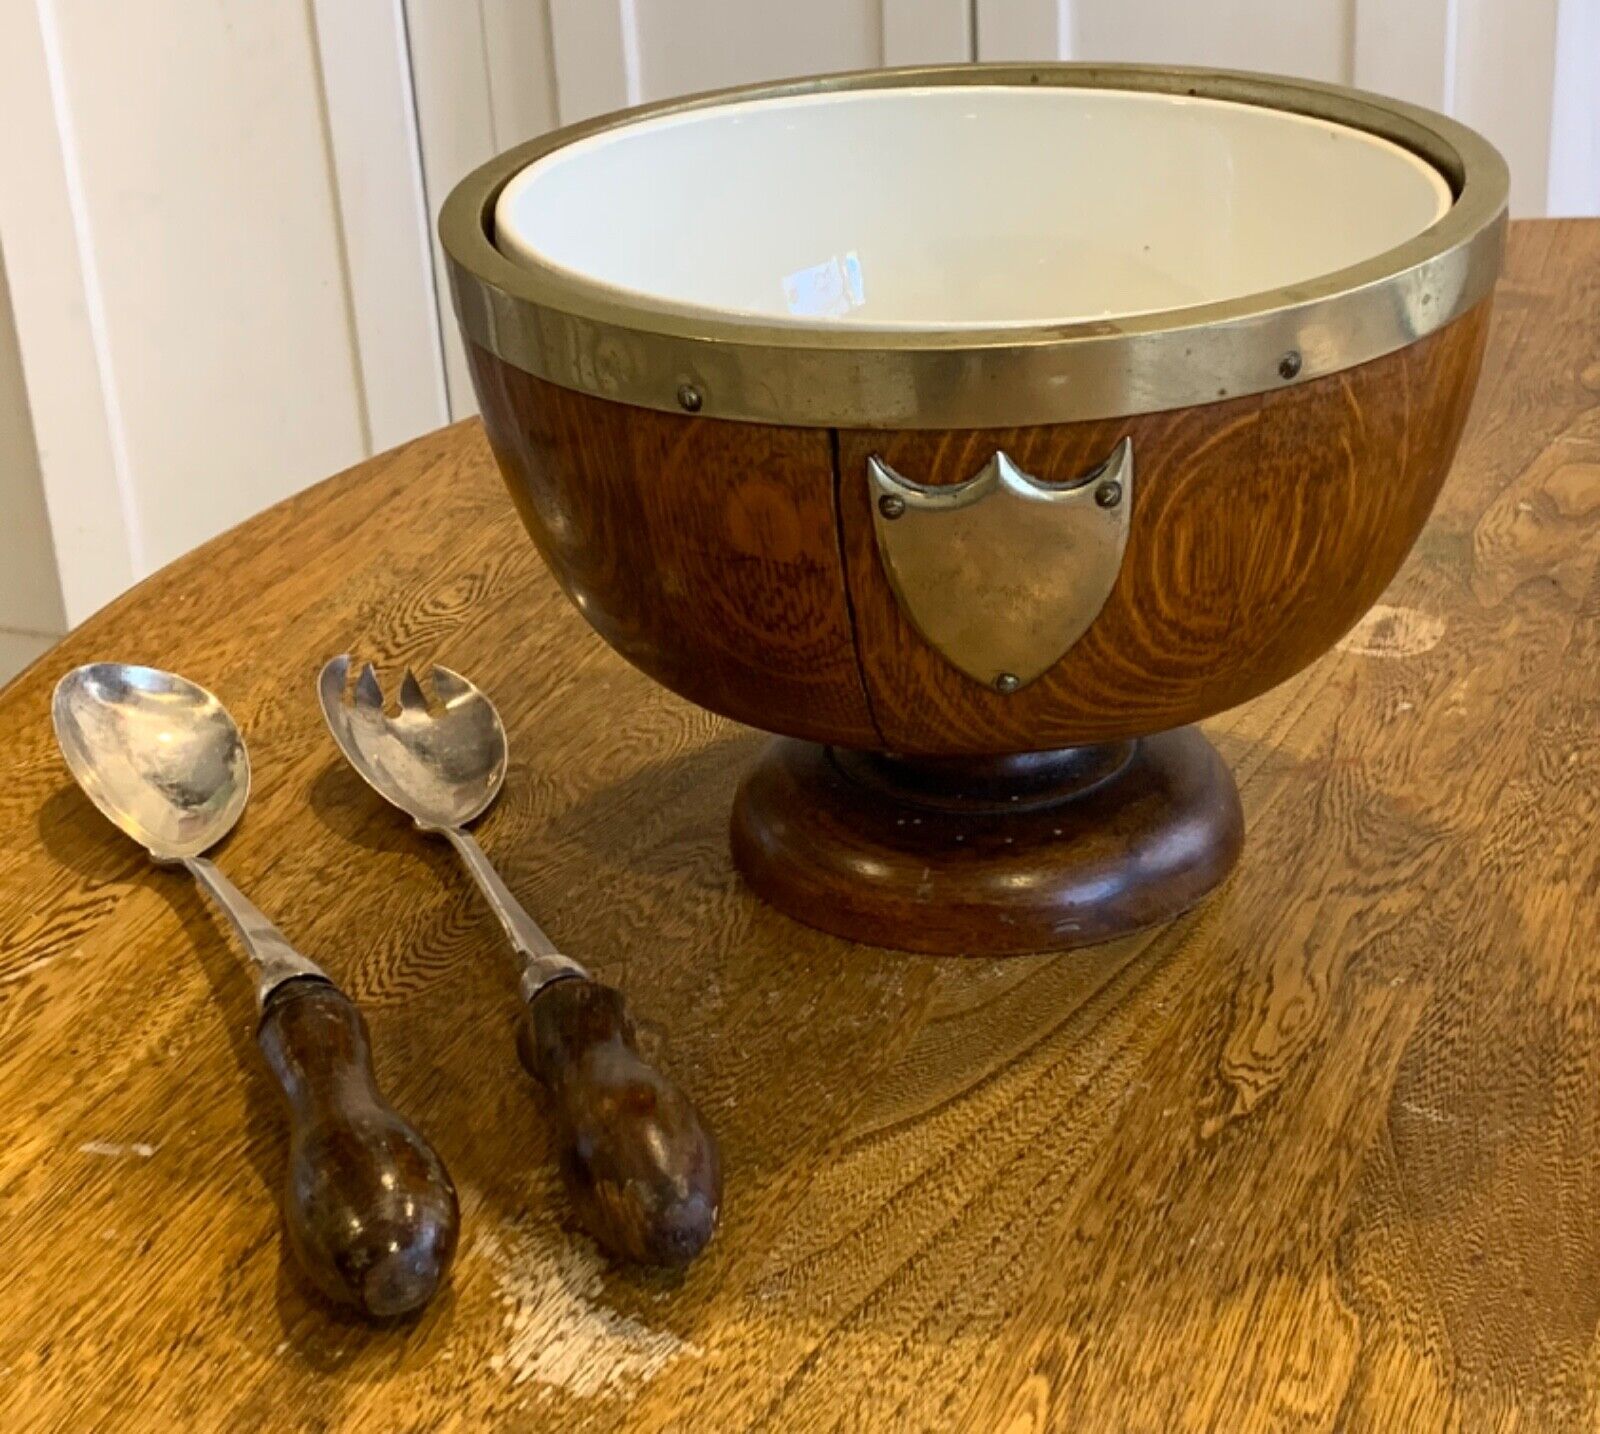 UNIQUE English Antique Regency Style Bowl with Utensils